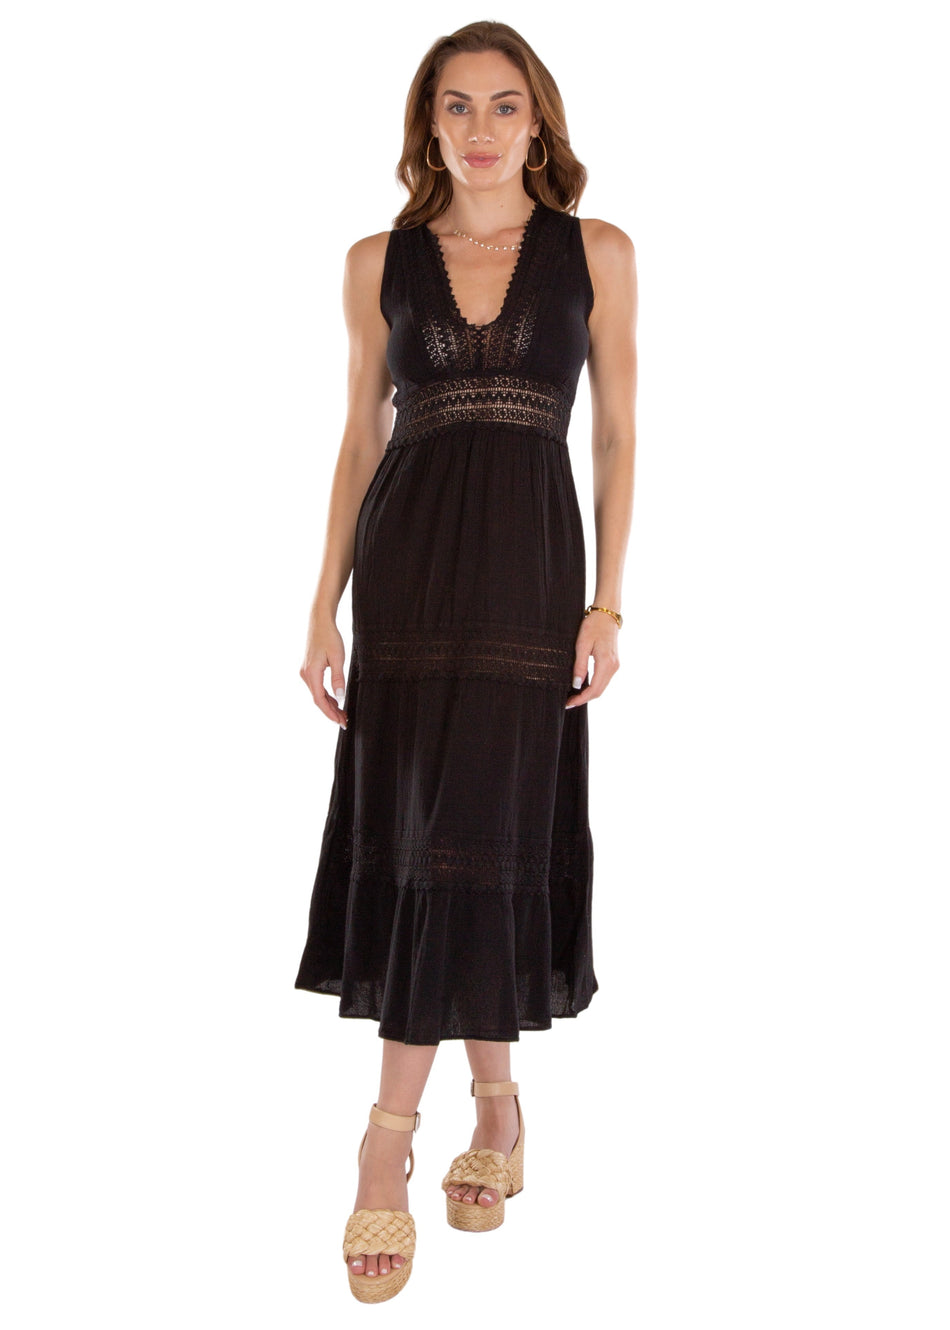 NW1516 - Black Cotton Dress